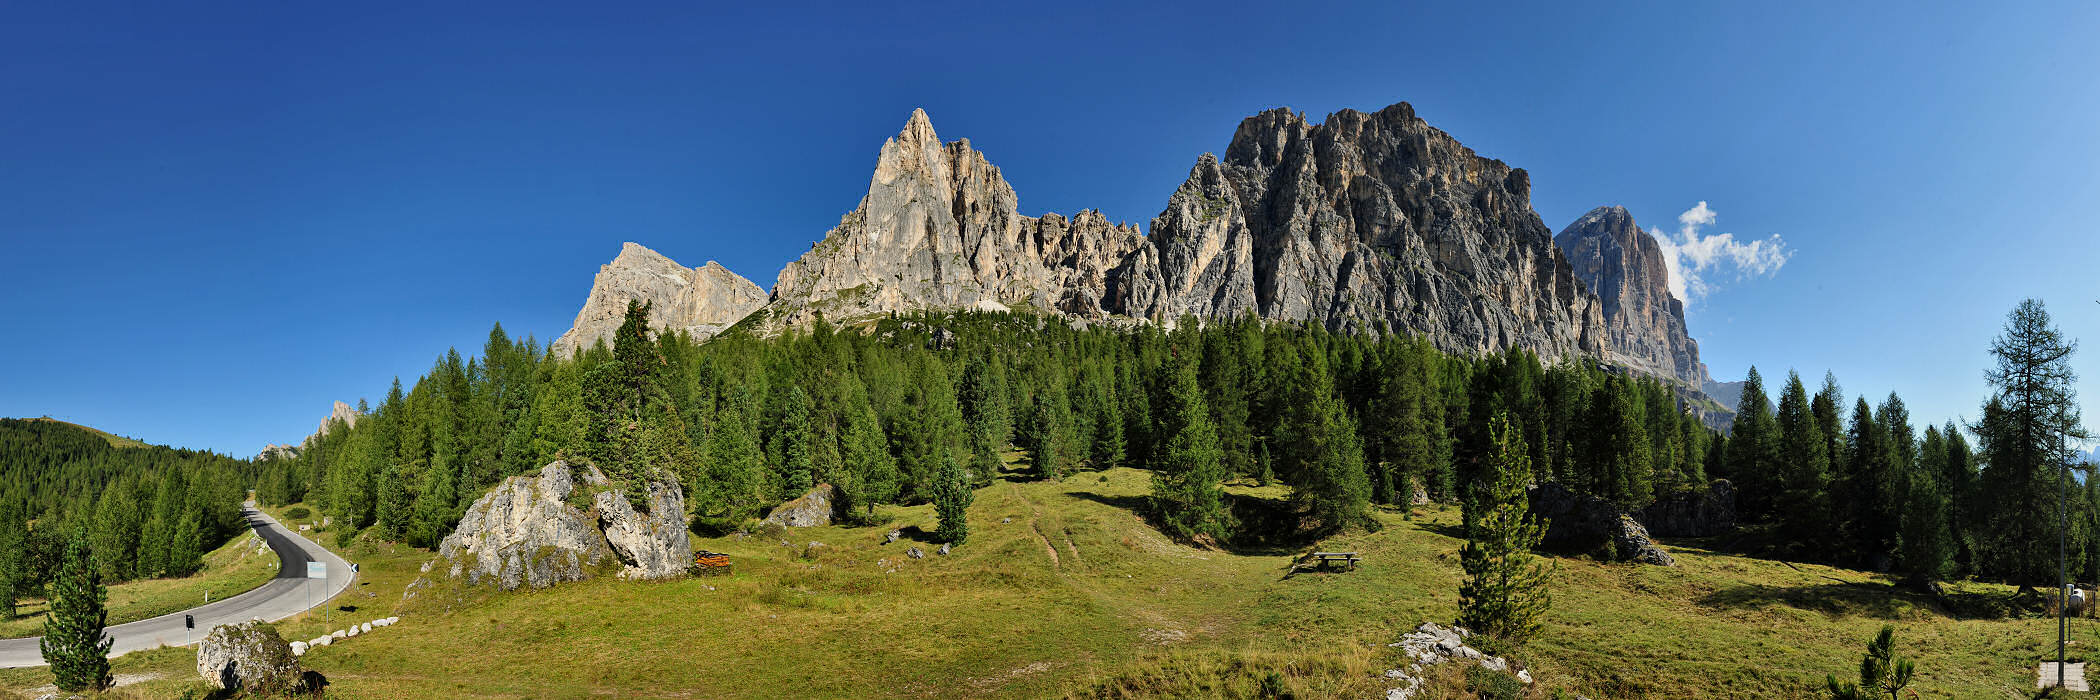 Dolomiti, Falzarego Sass de Stria Lagazuoi Tofana, Cortina d'Ampezzo